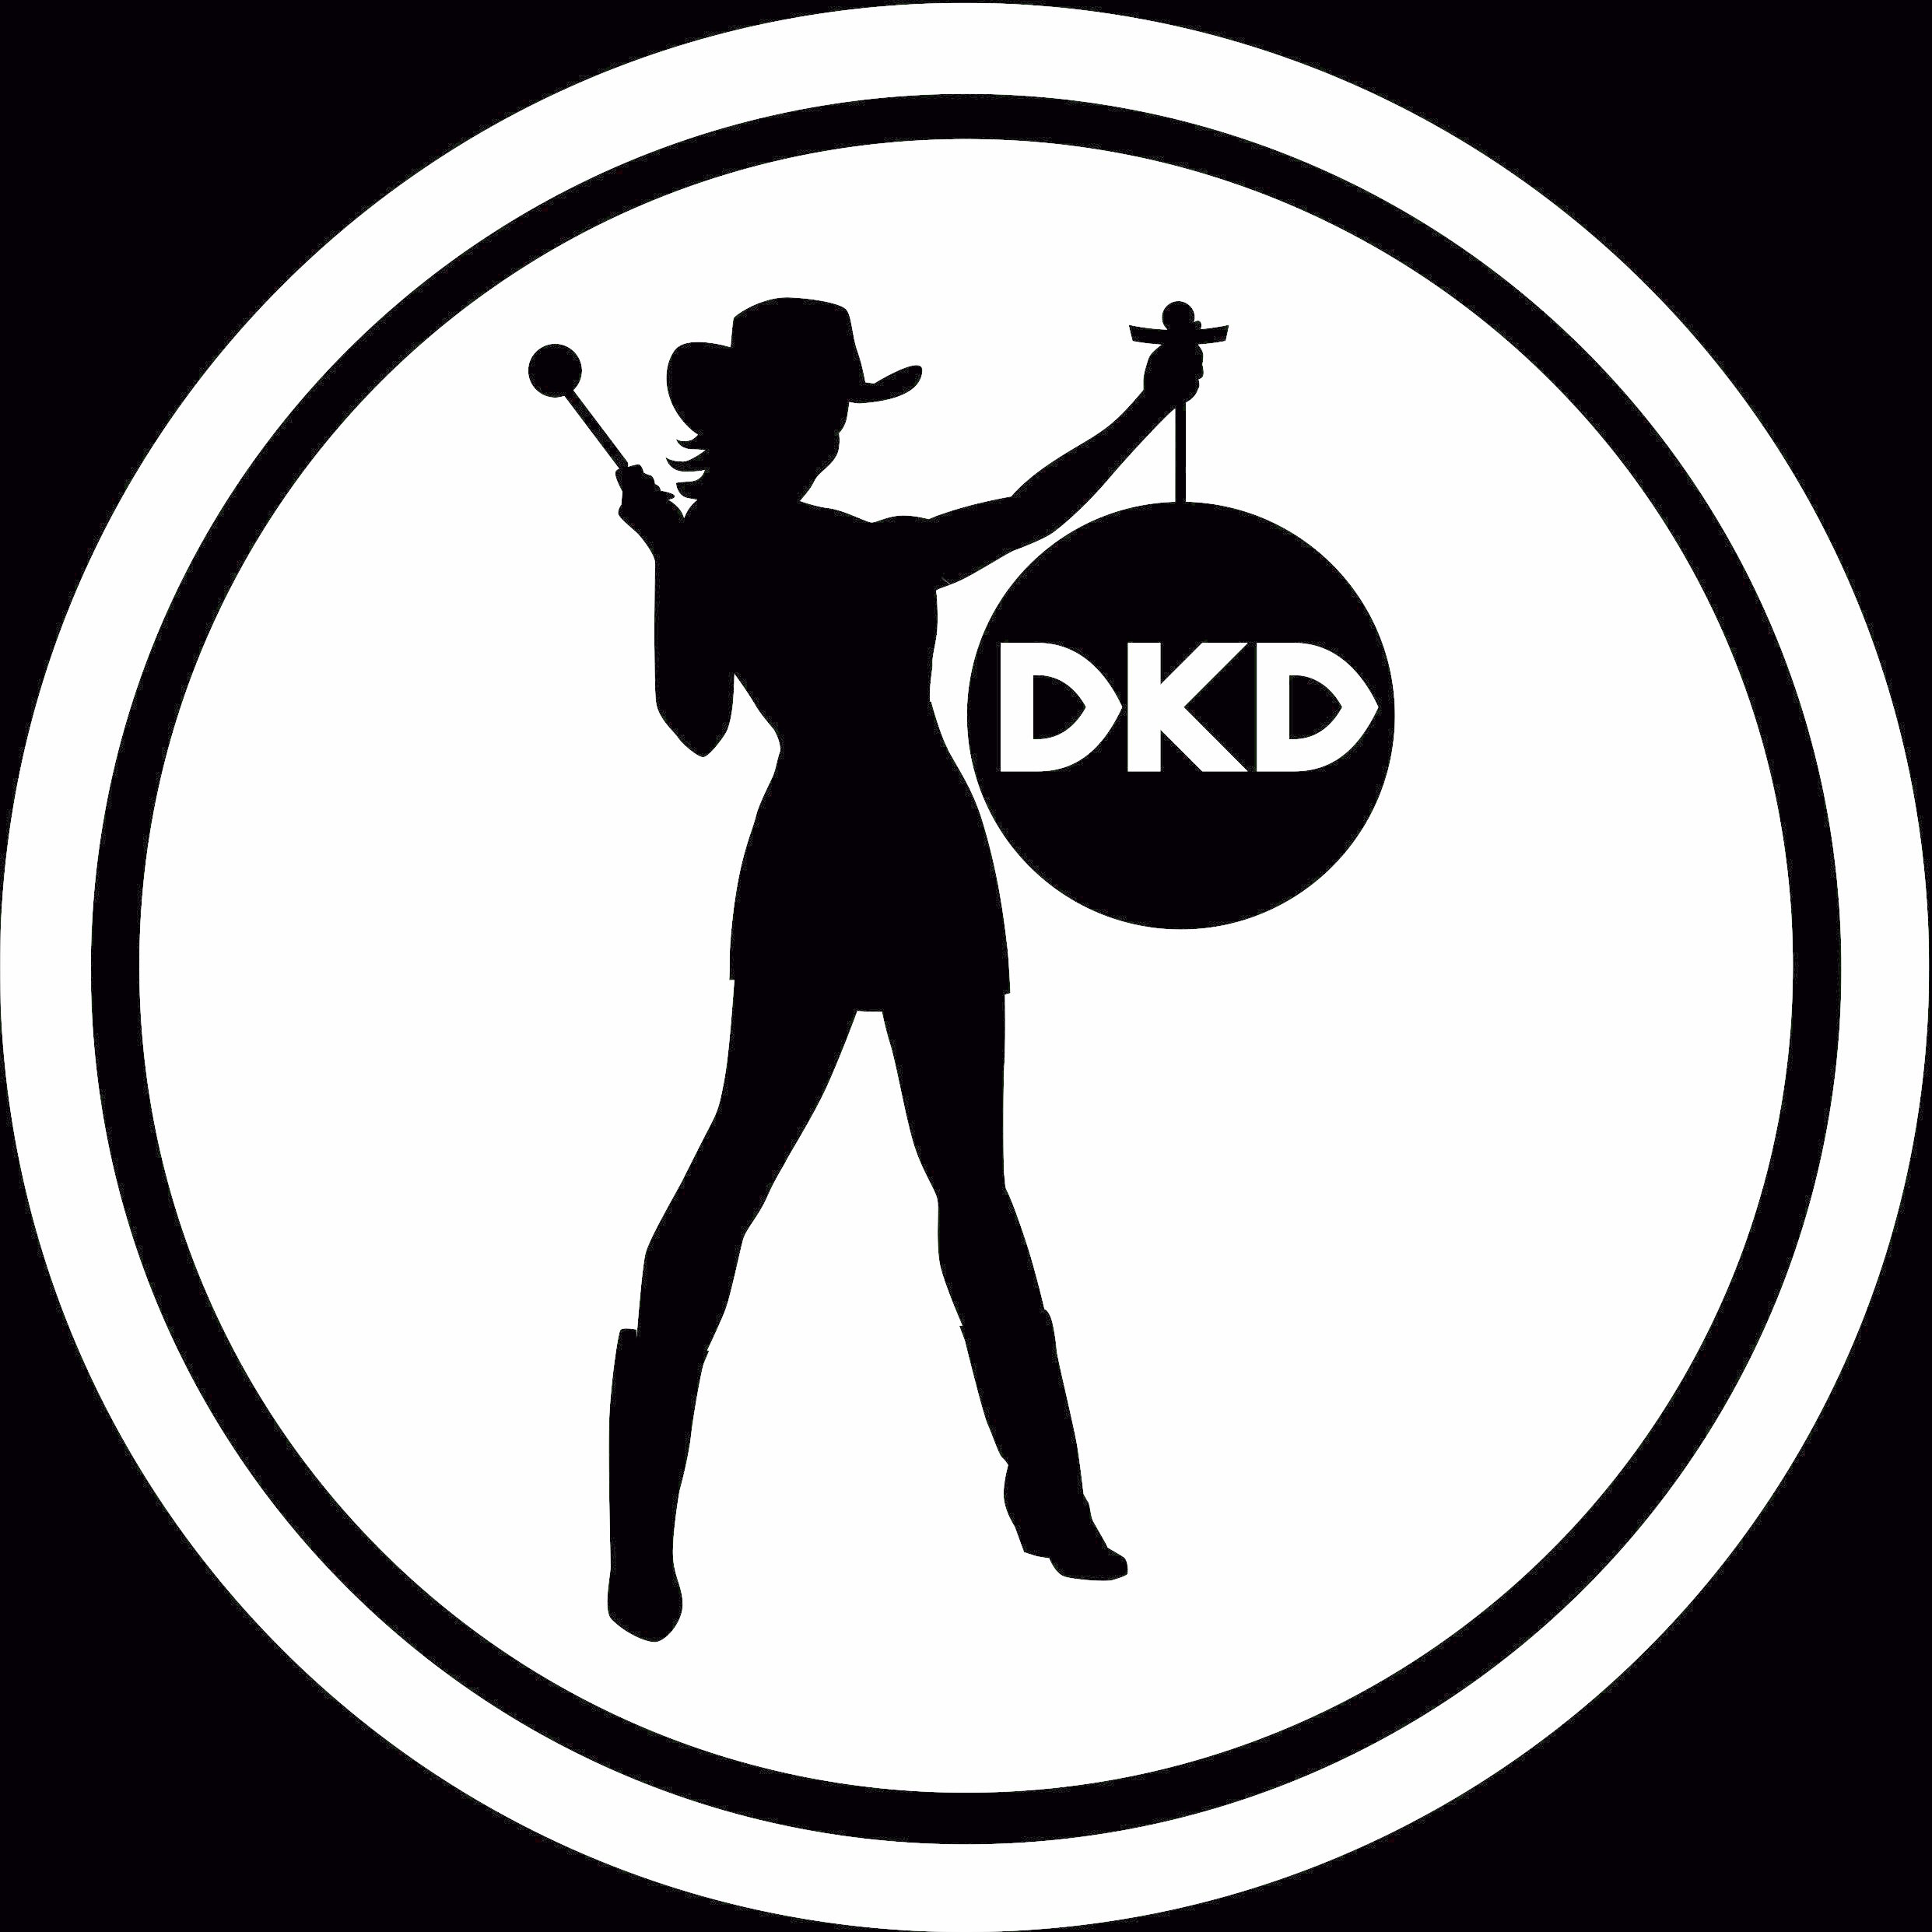 DKD_logo_round_inverted_black copy (1).jpg